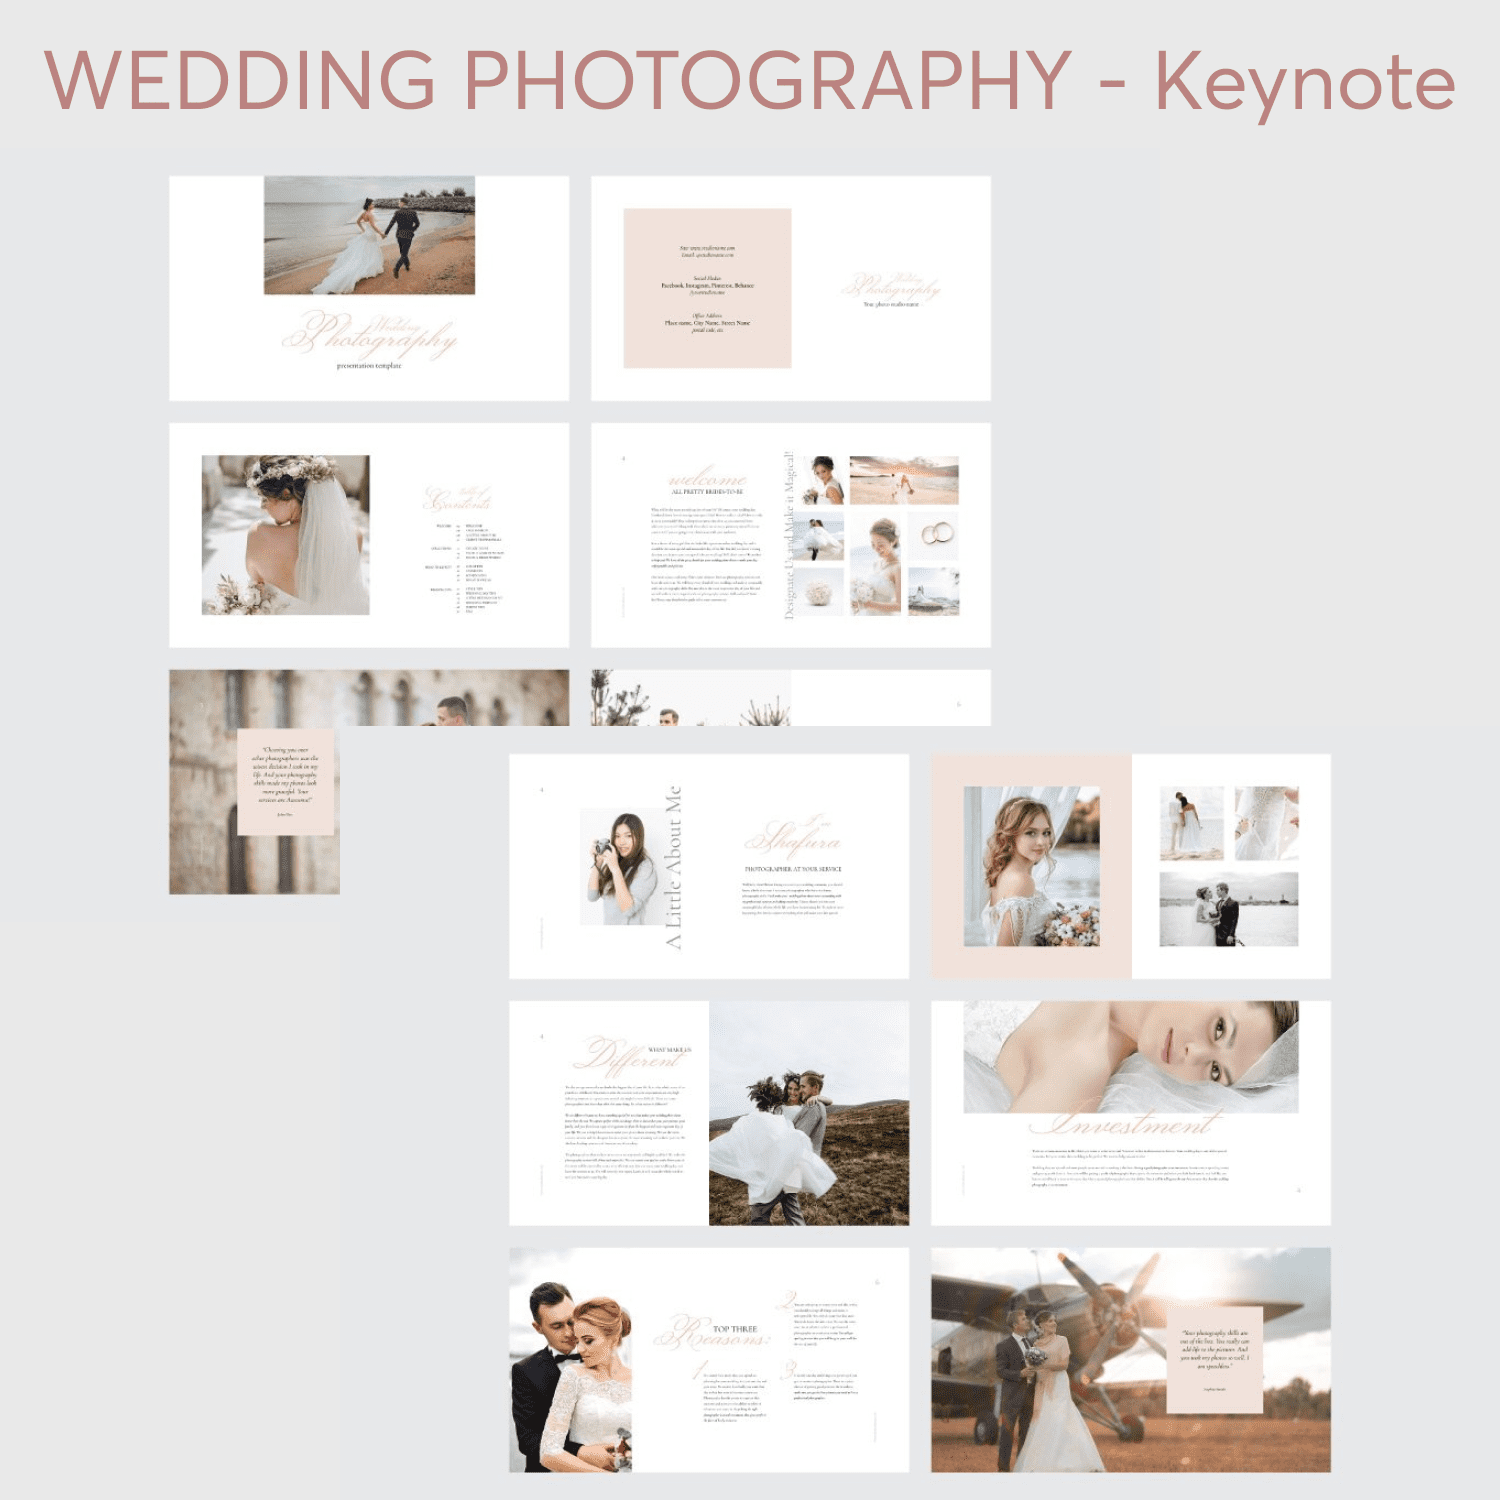 WEDDING PHOTOGRAPHY - Keynote.